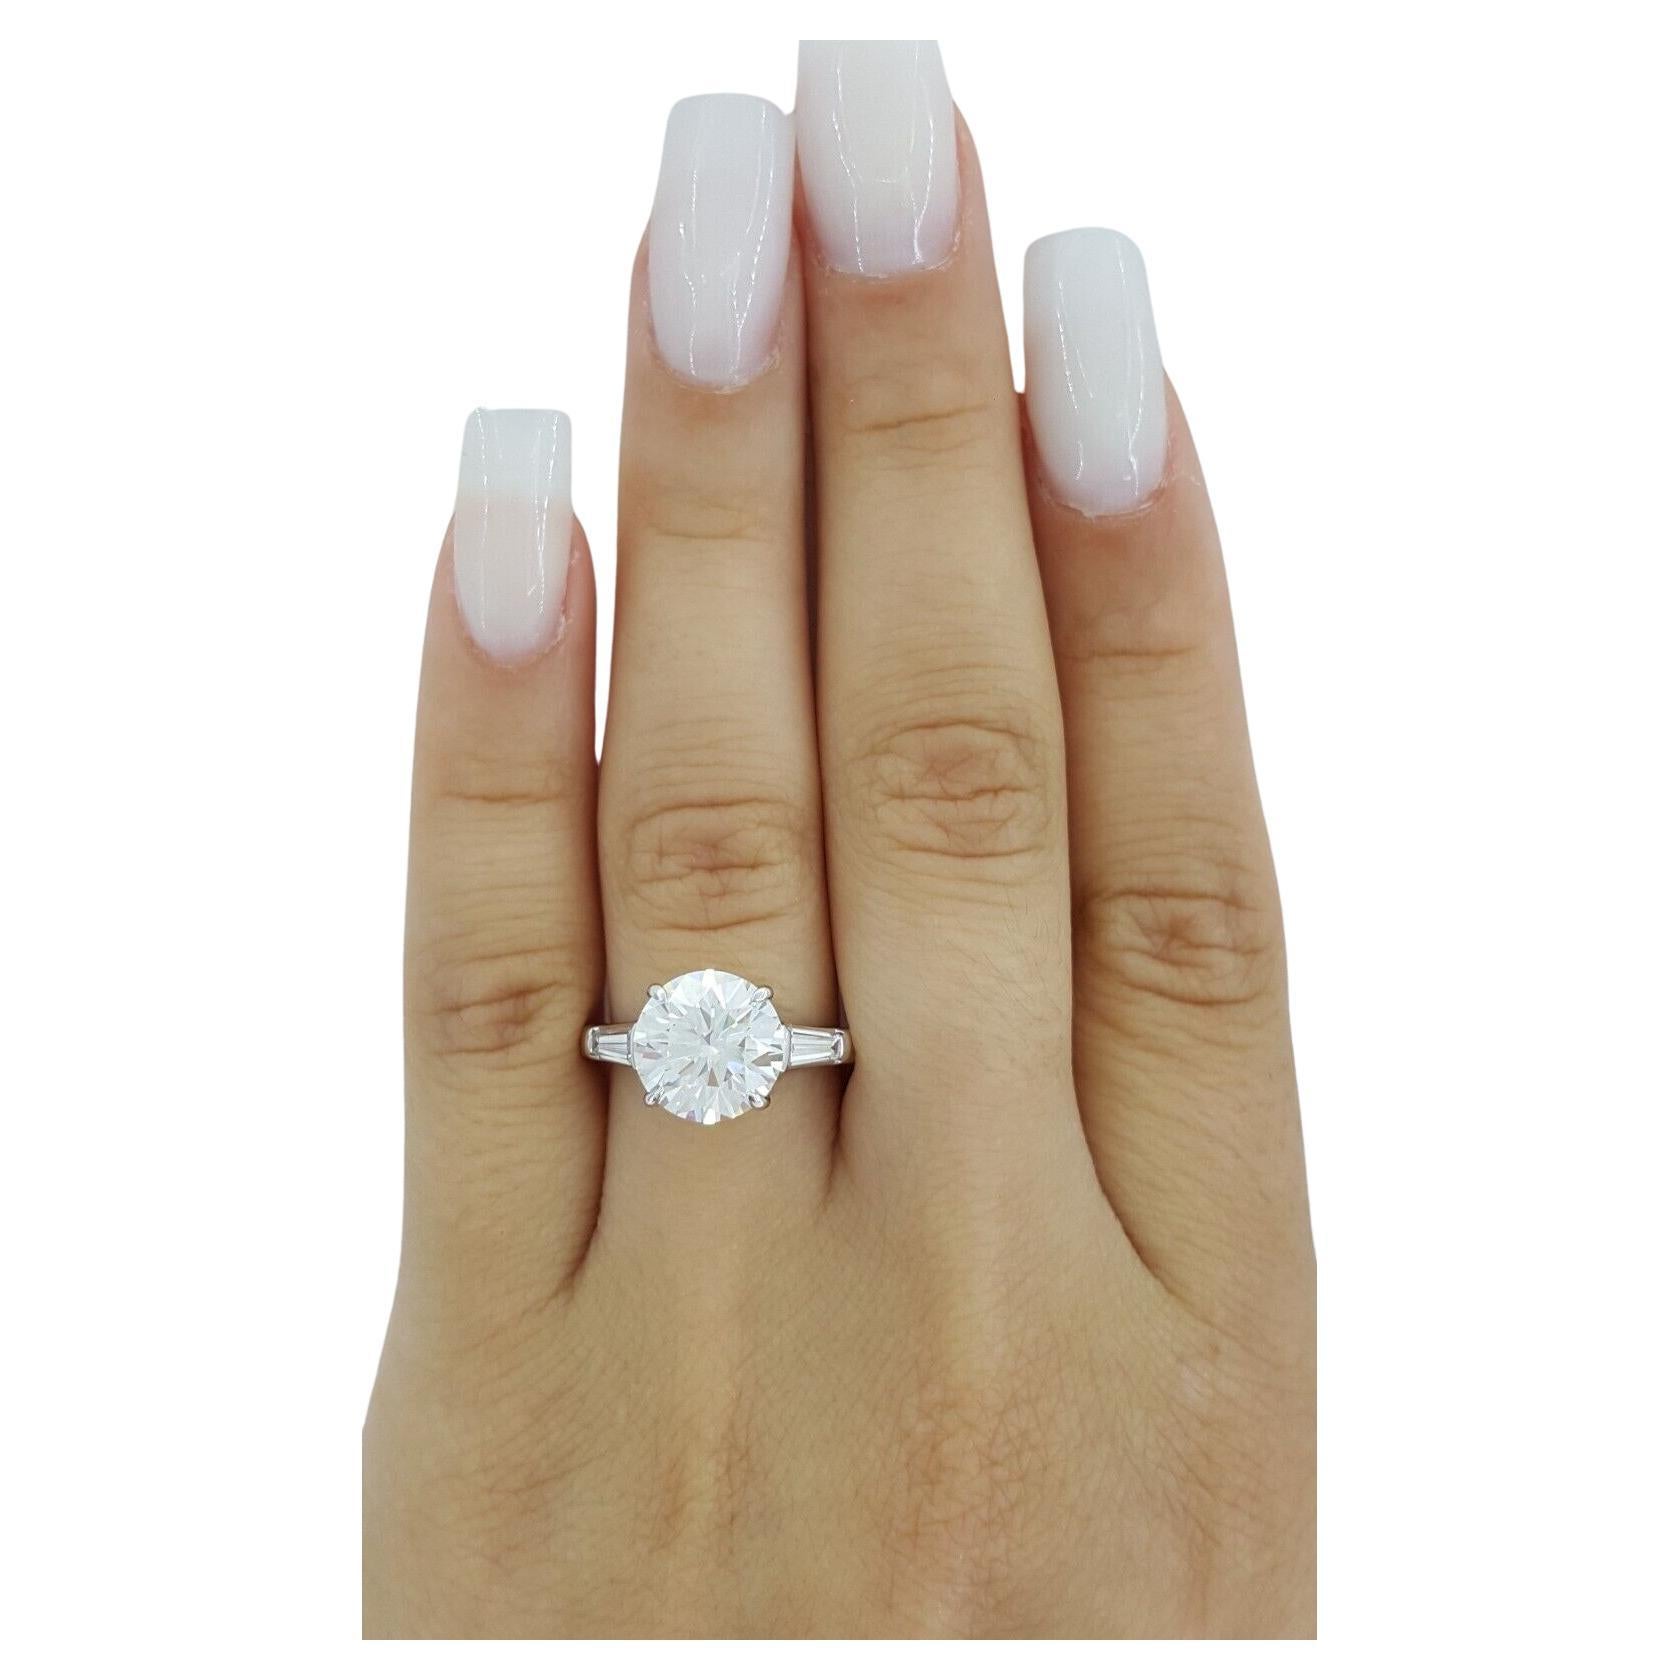  Tiffany & Co. 3.83 ct Total Weight Platinum Round Brilliant Cut Diamond Ring